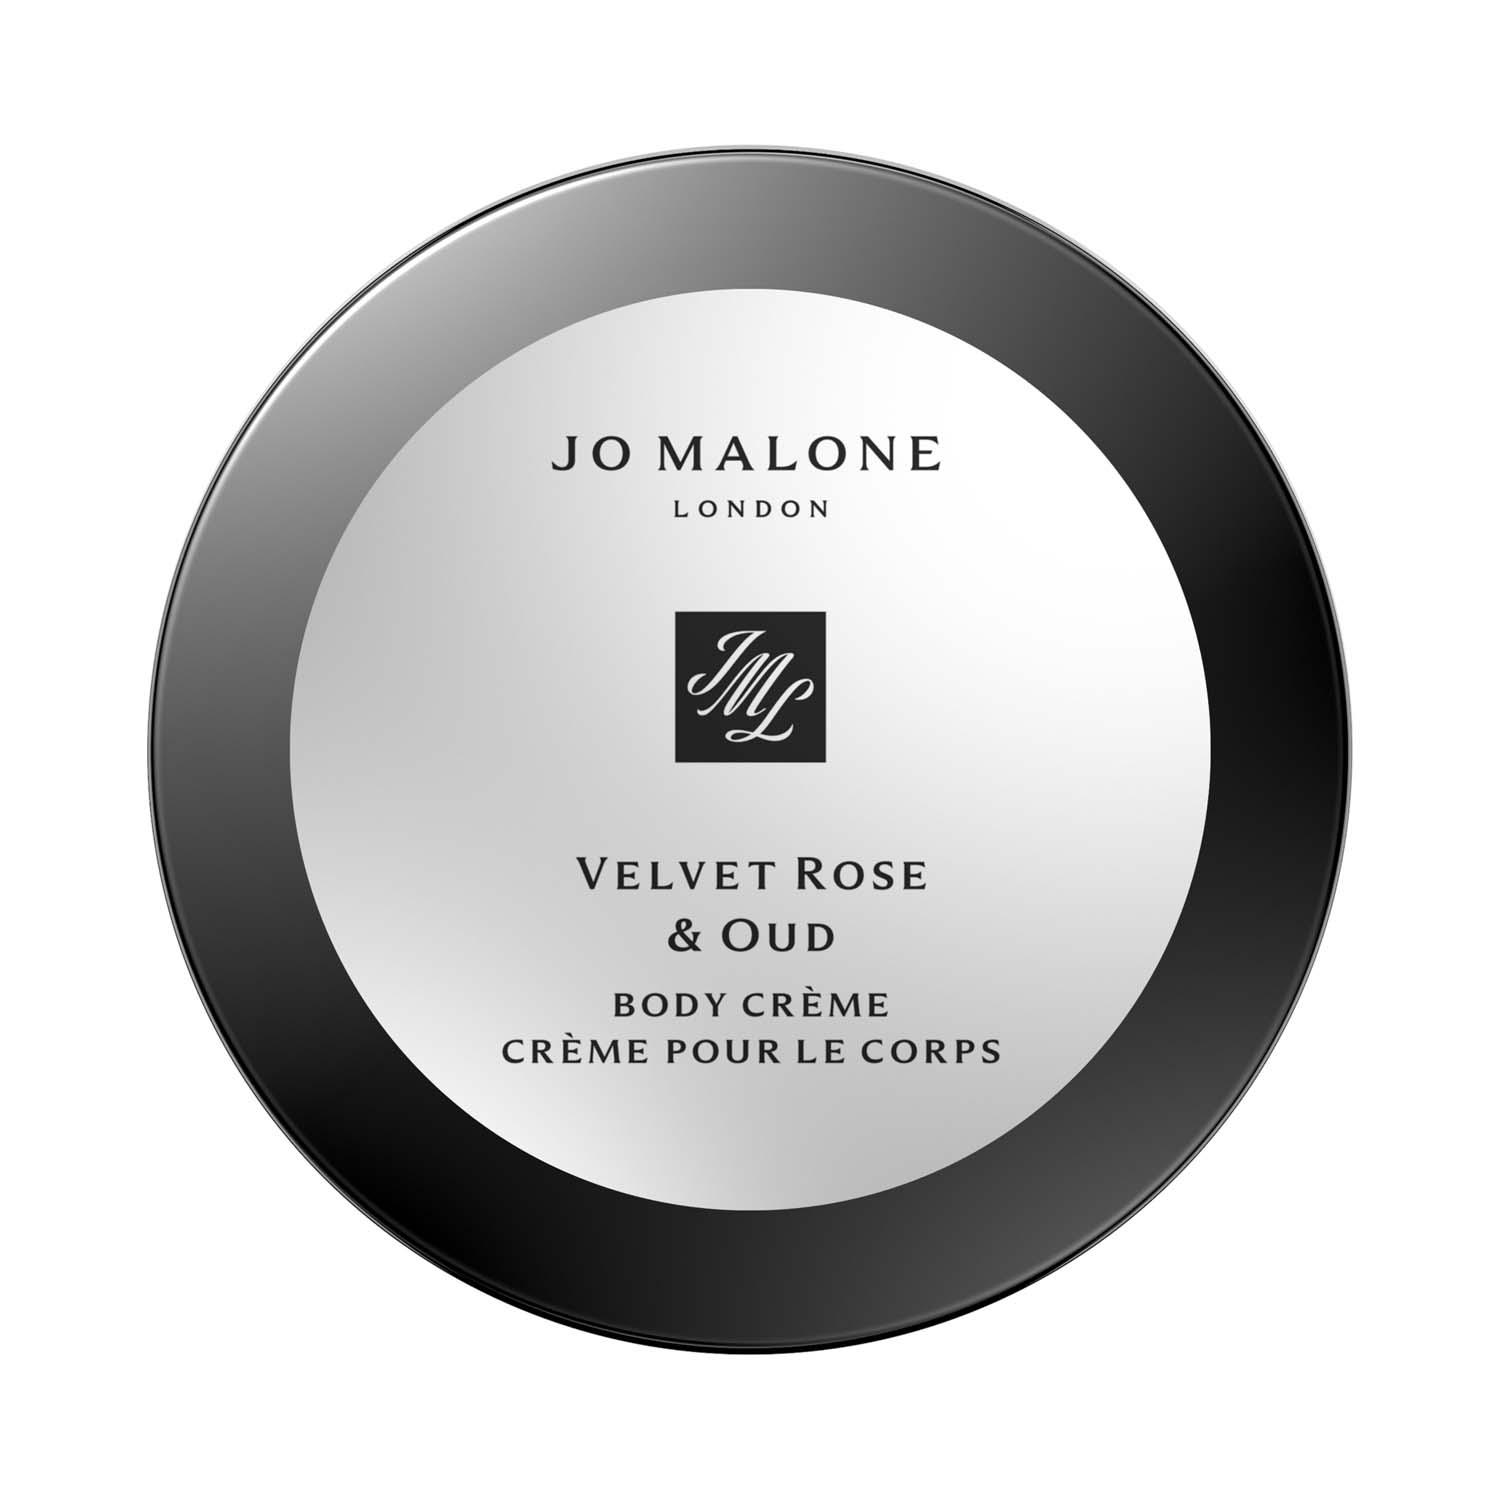 Jo Malone London | Jo Malone London Velvet Rose & Oud Body Creme (50ml)